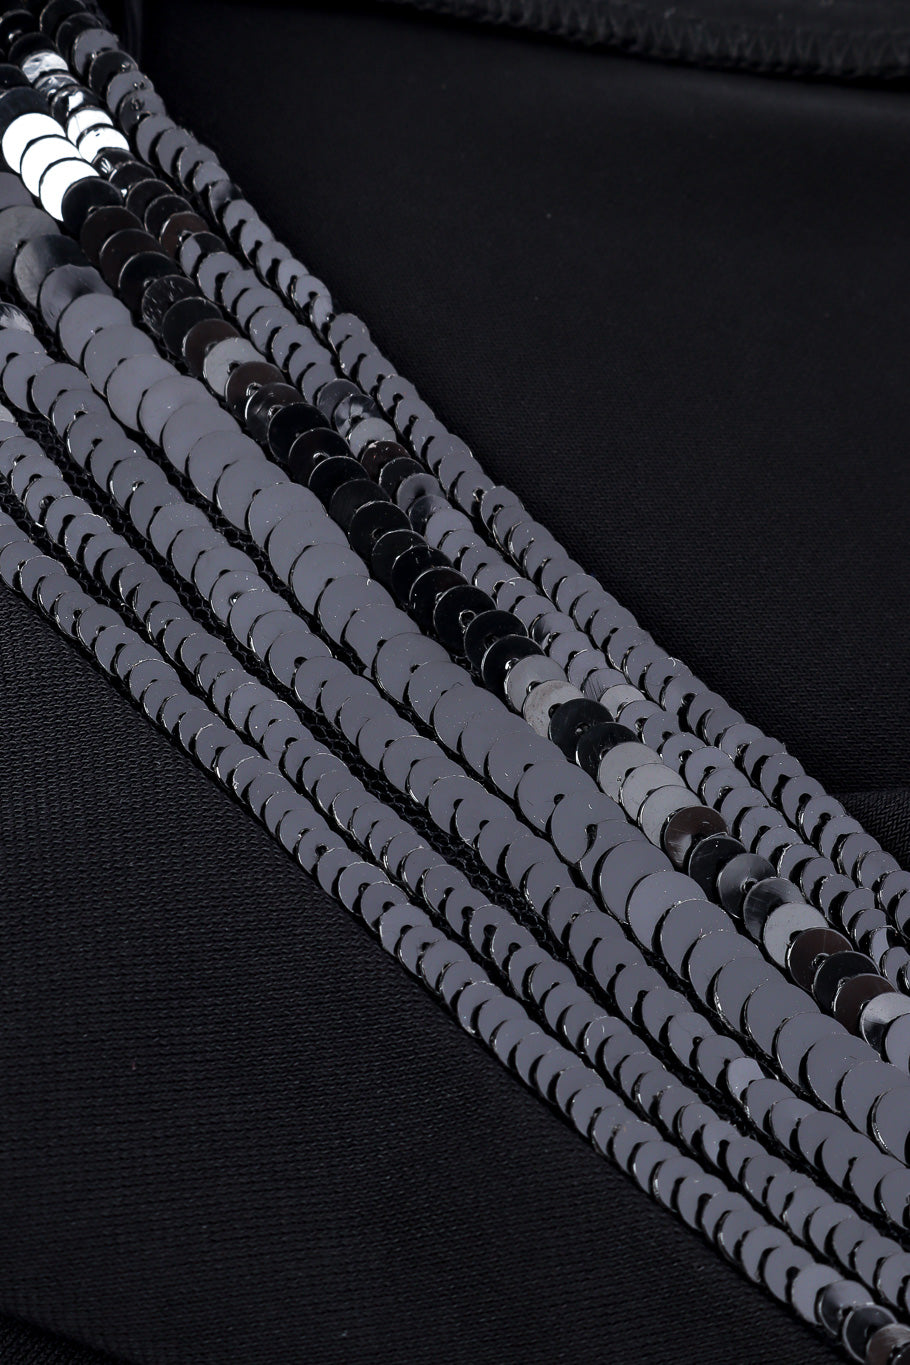 Valentino one shoulder sequin gown details @recessla